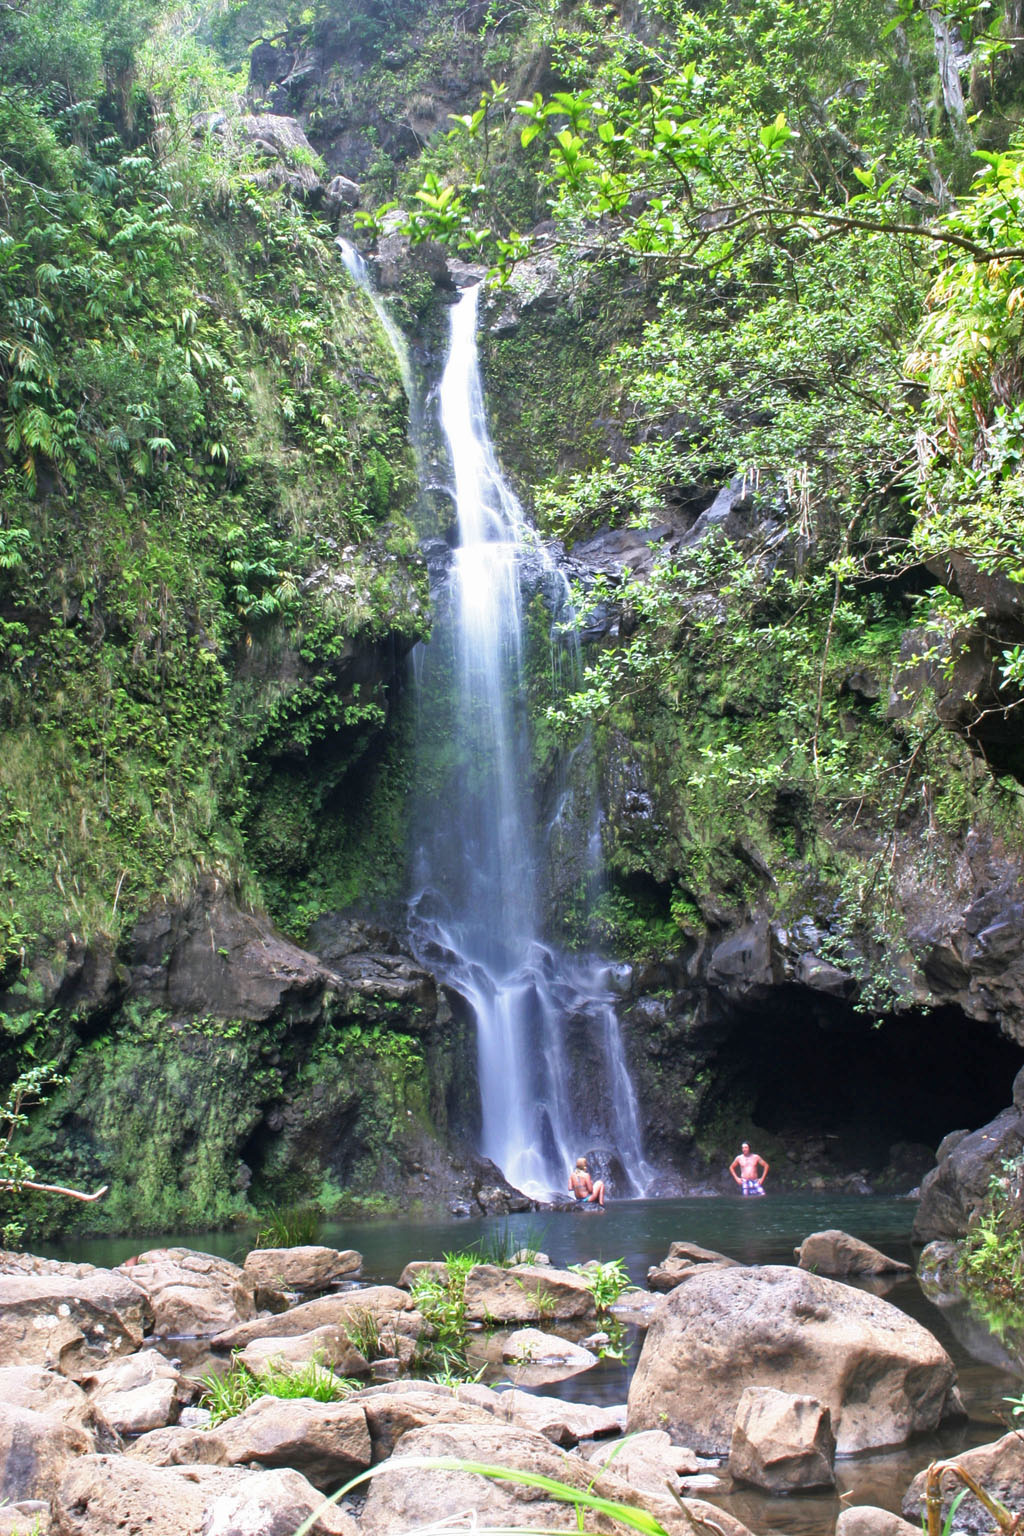 A couple enjoy sitting under the larger falls at Waikamoi